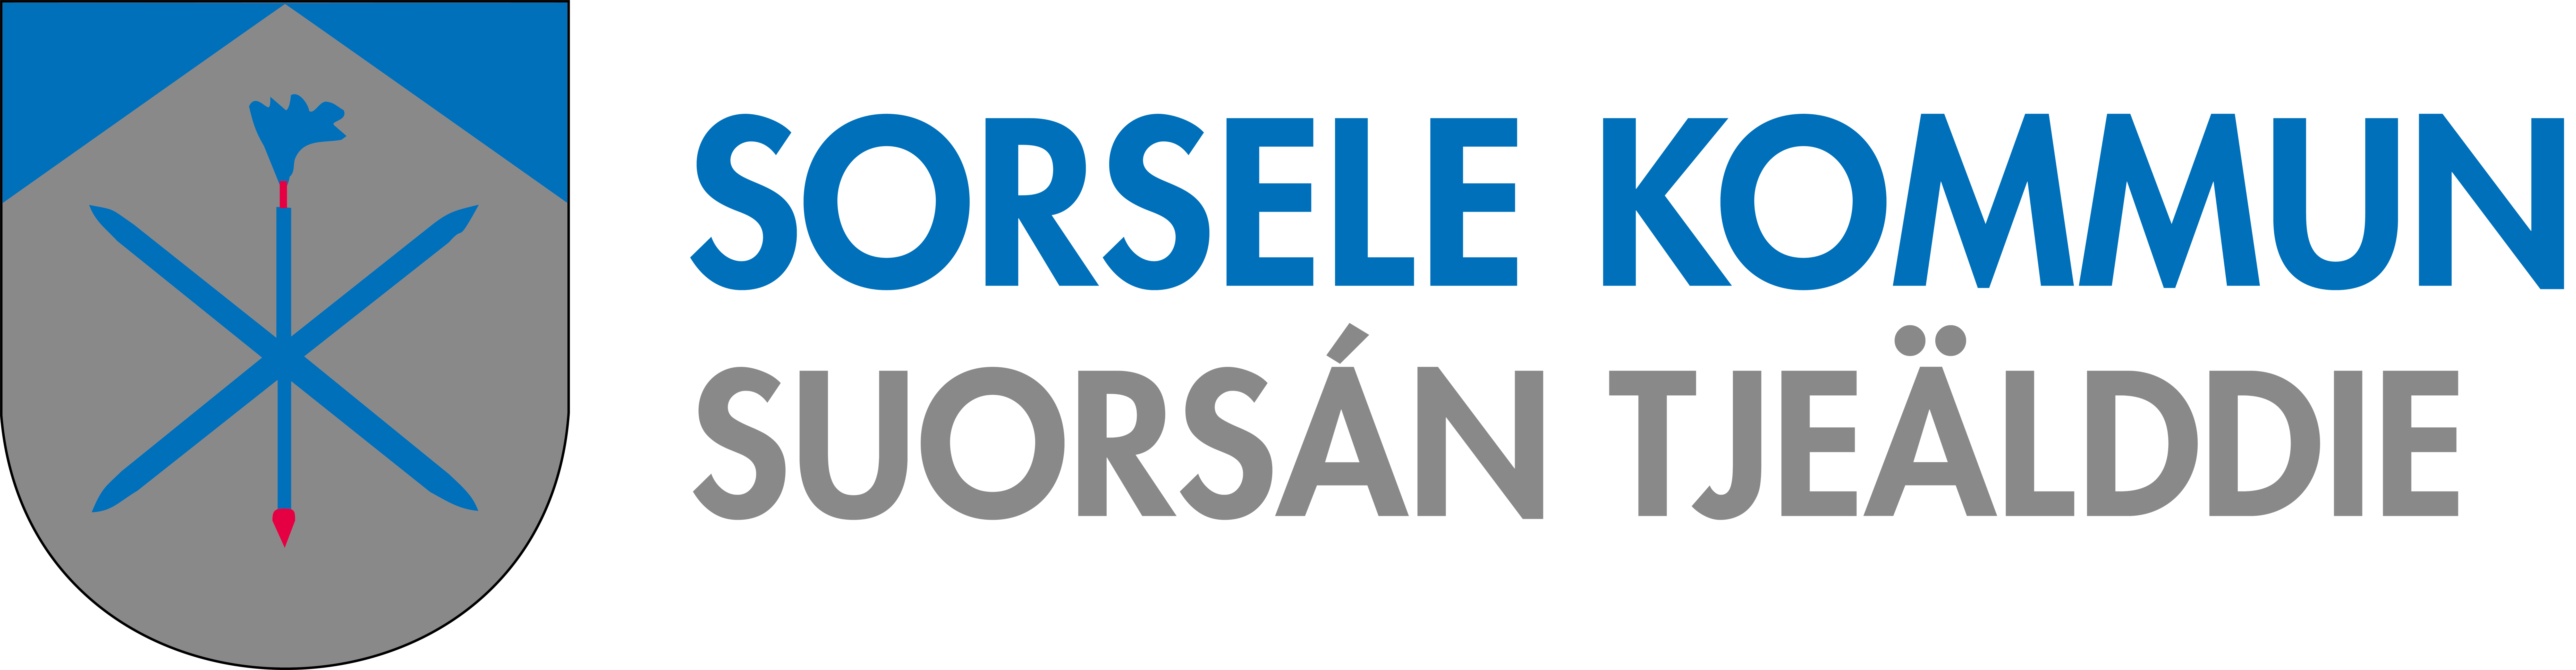 Sorsele kommun Logo | OnePartnerGroup